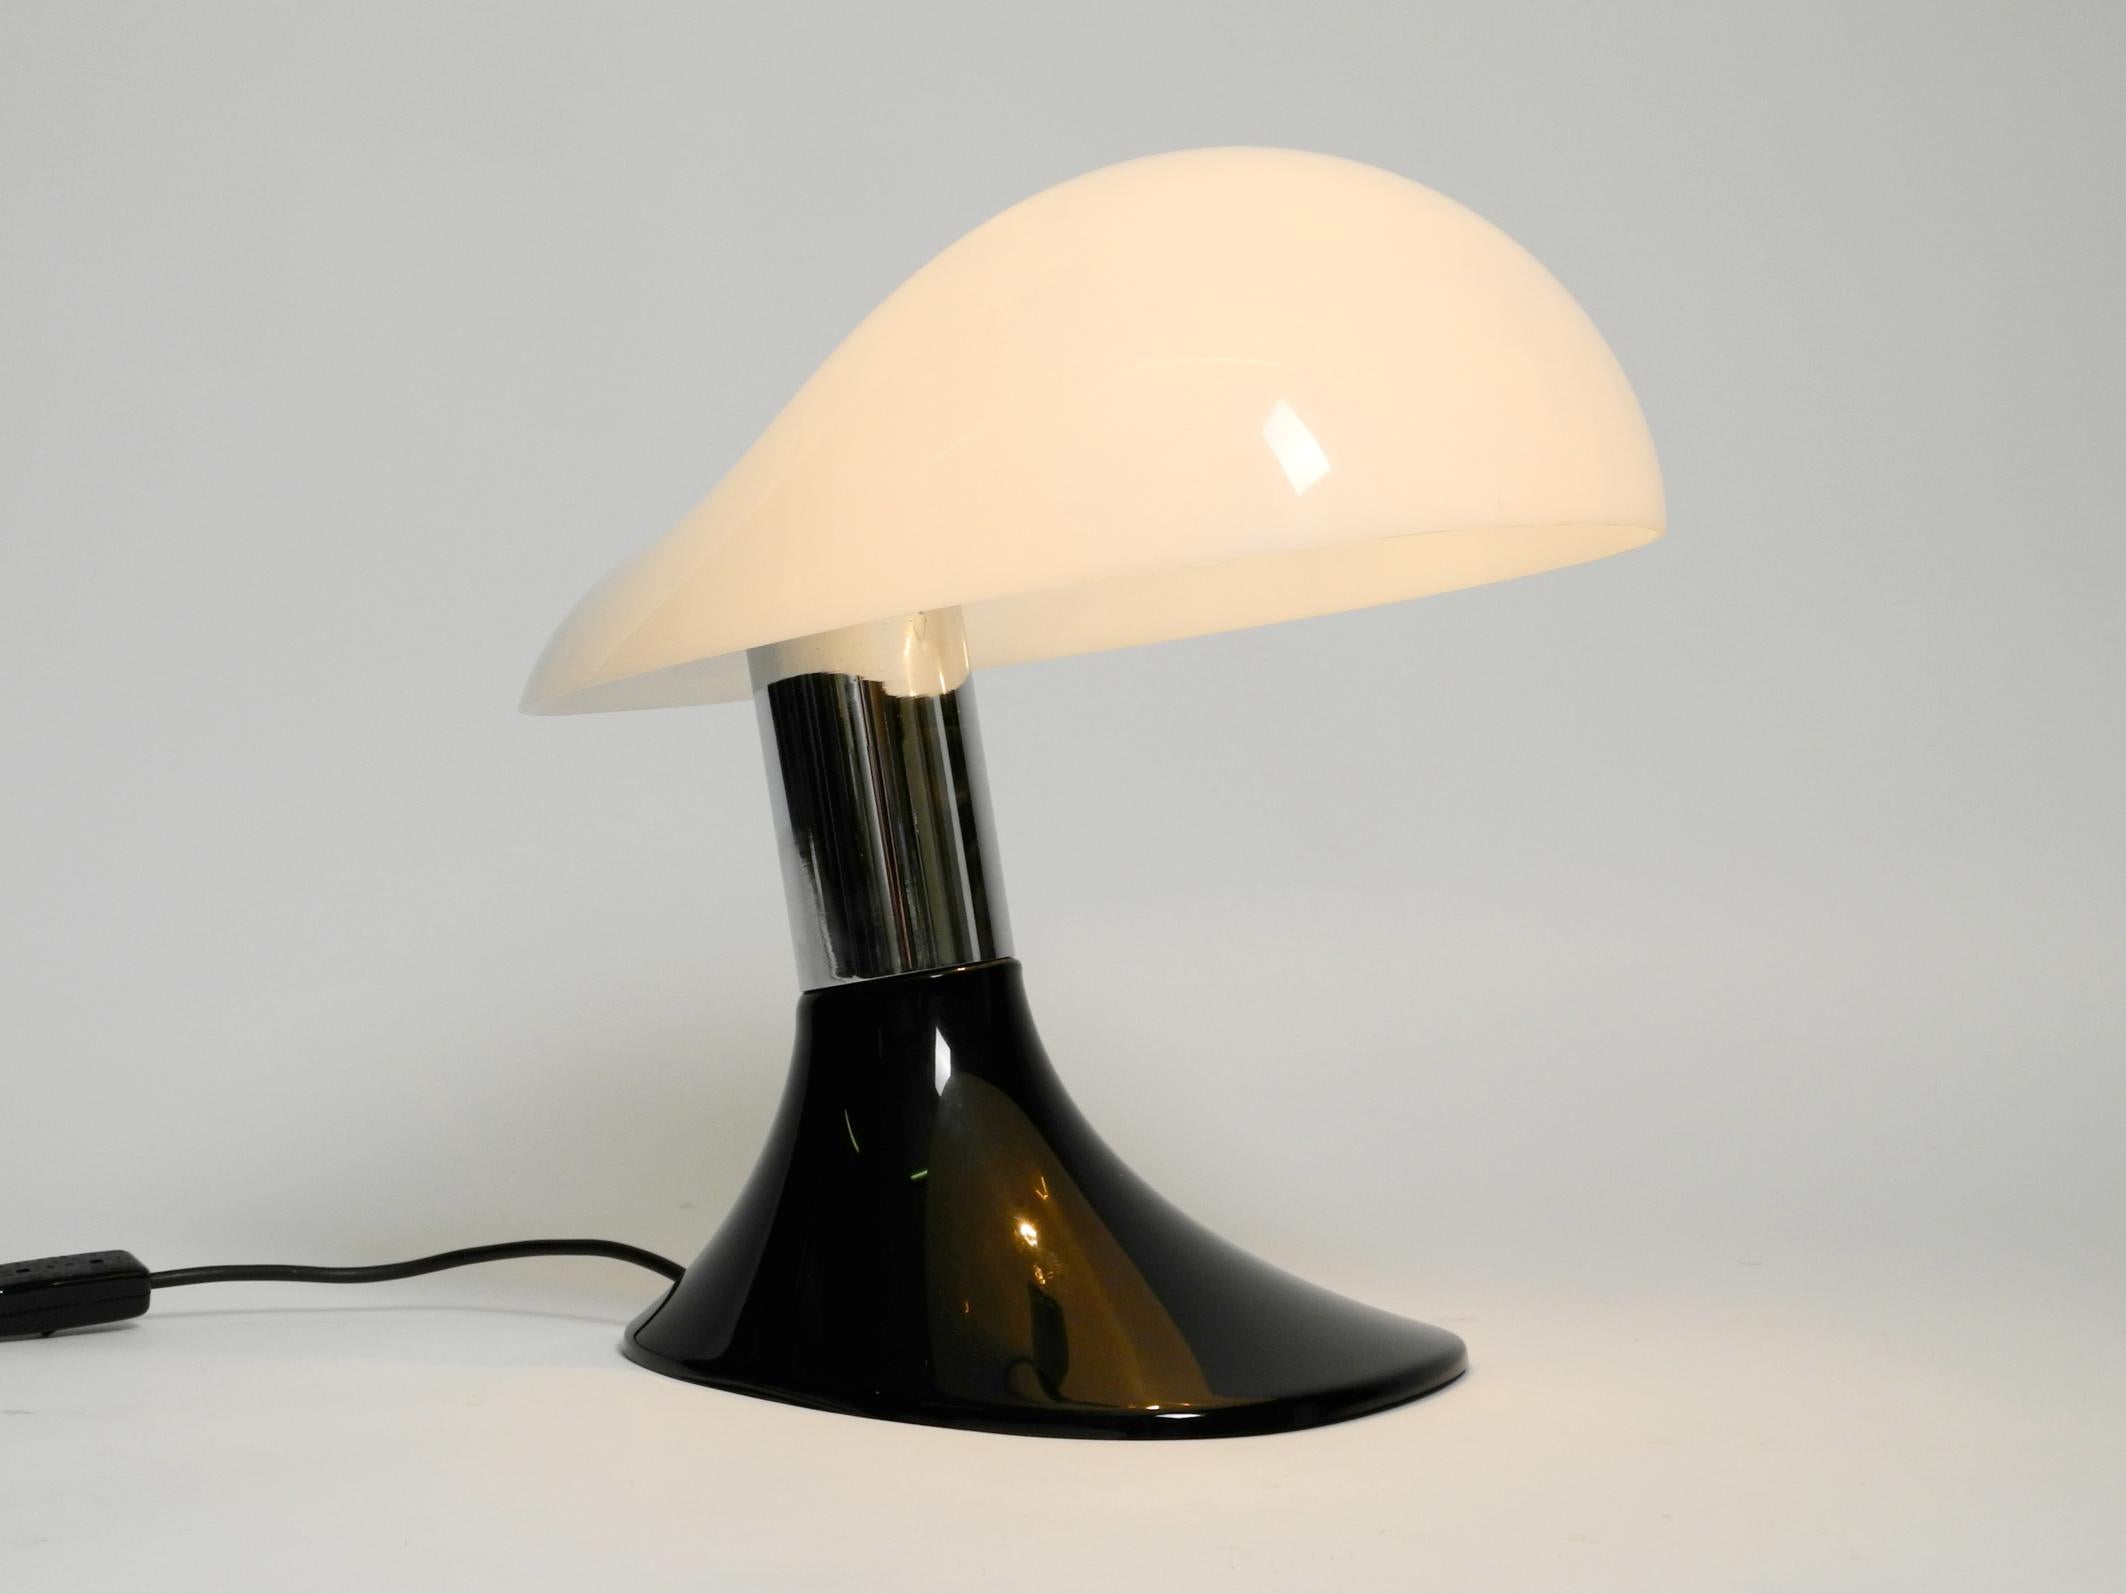 Original 1960s Italian space age table lamp model 